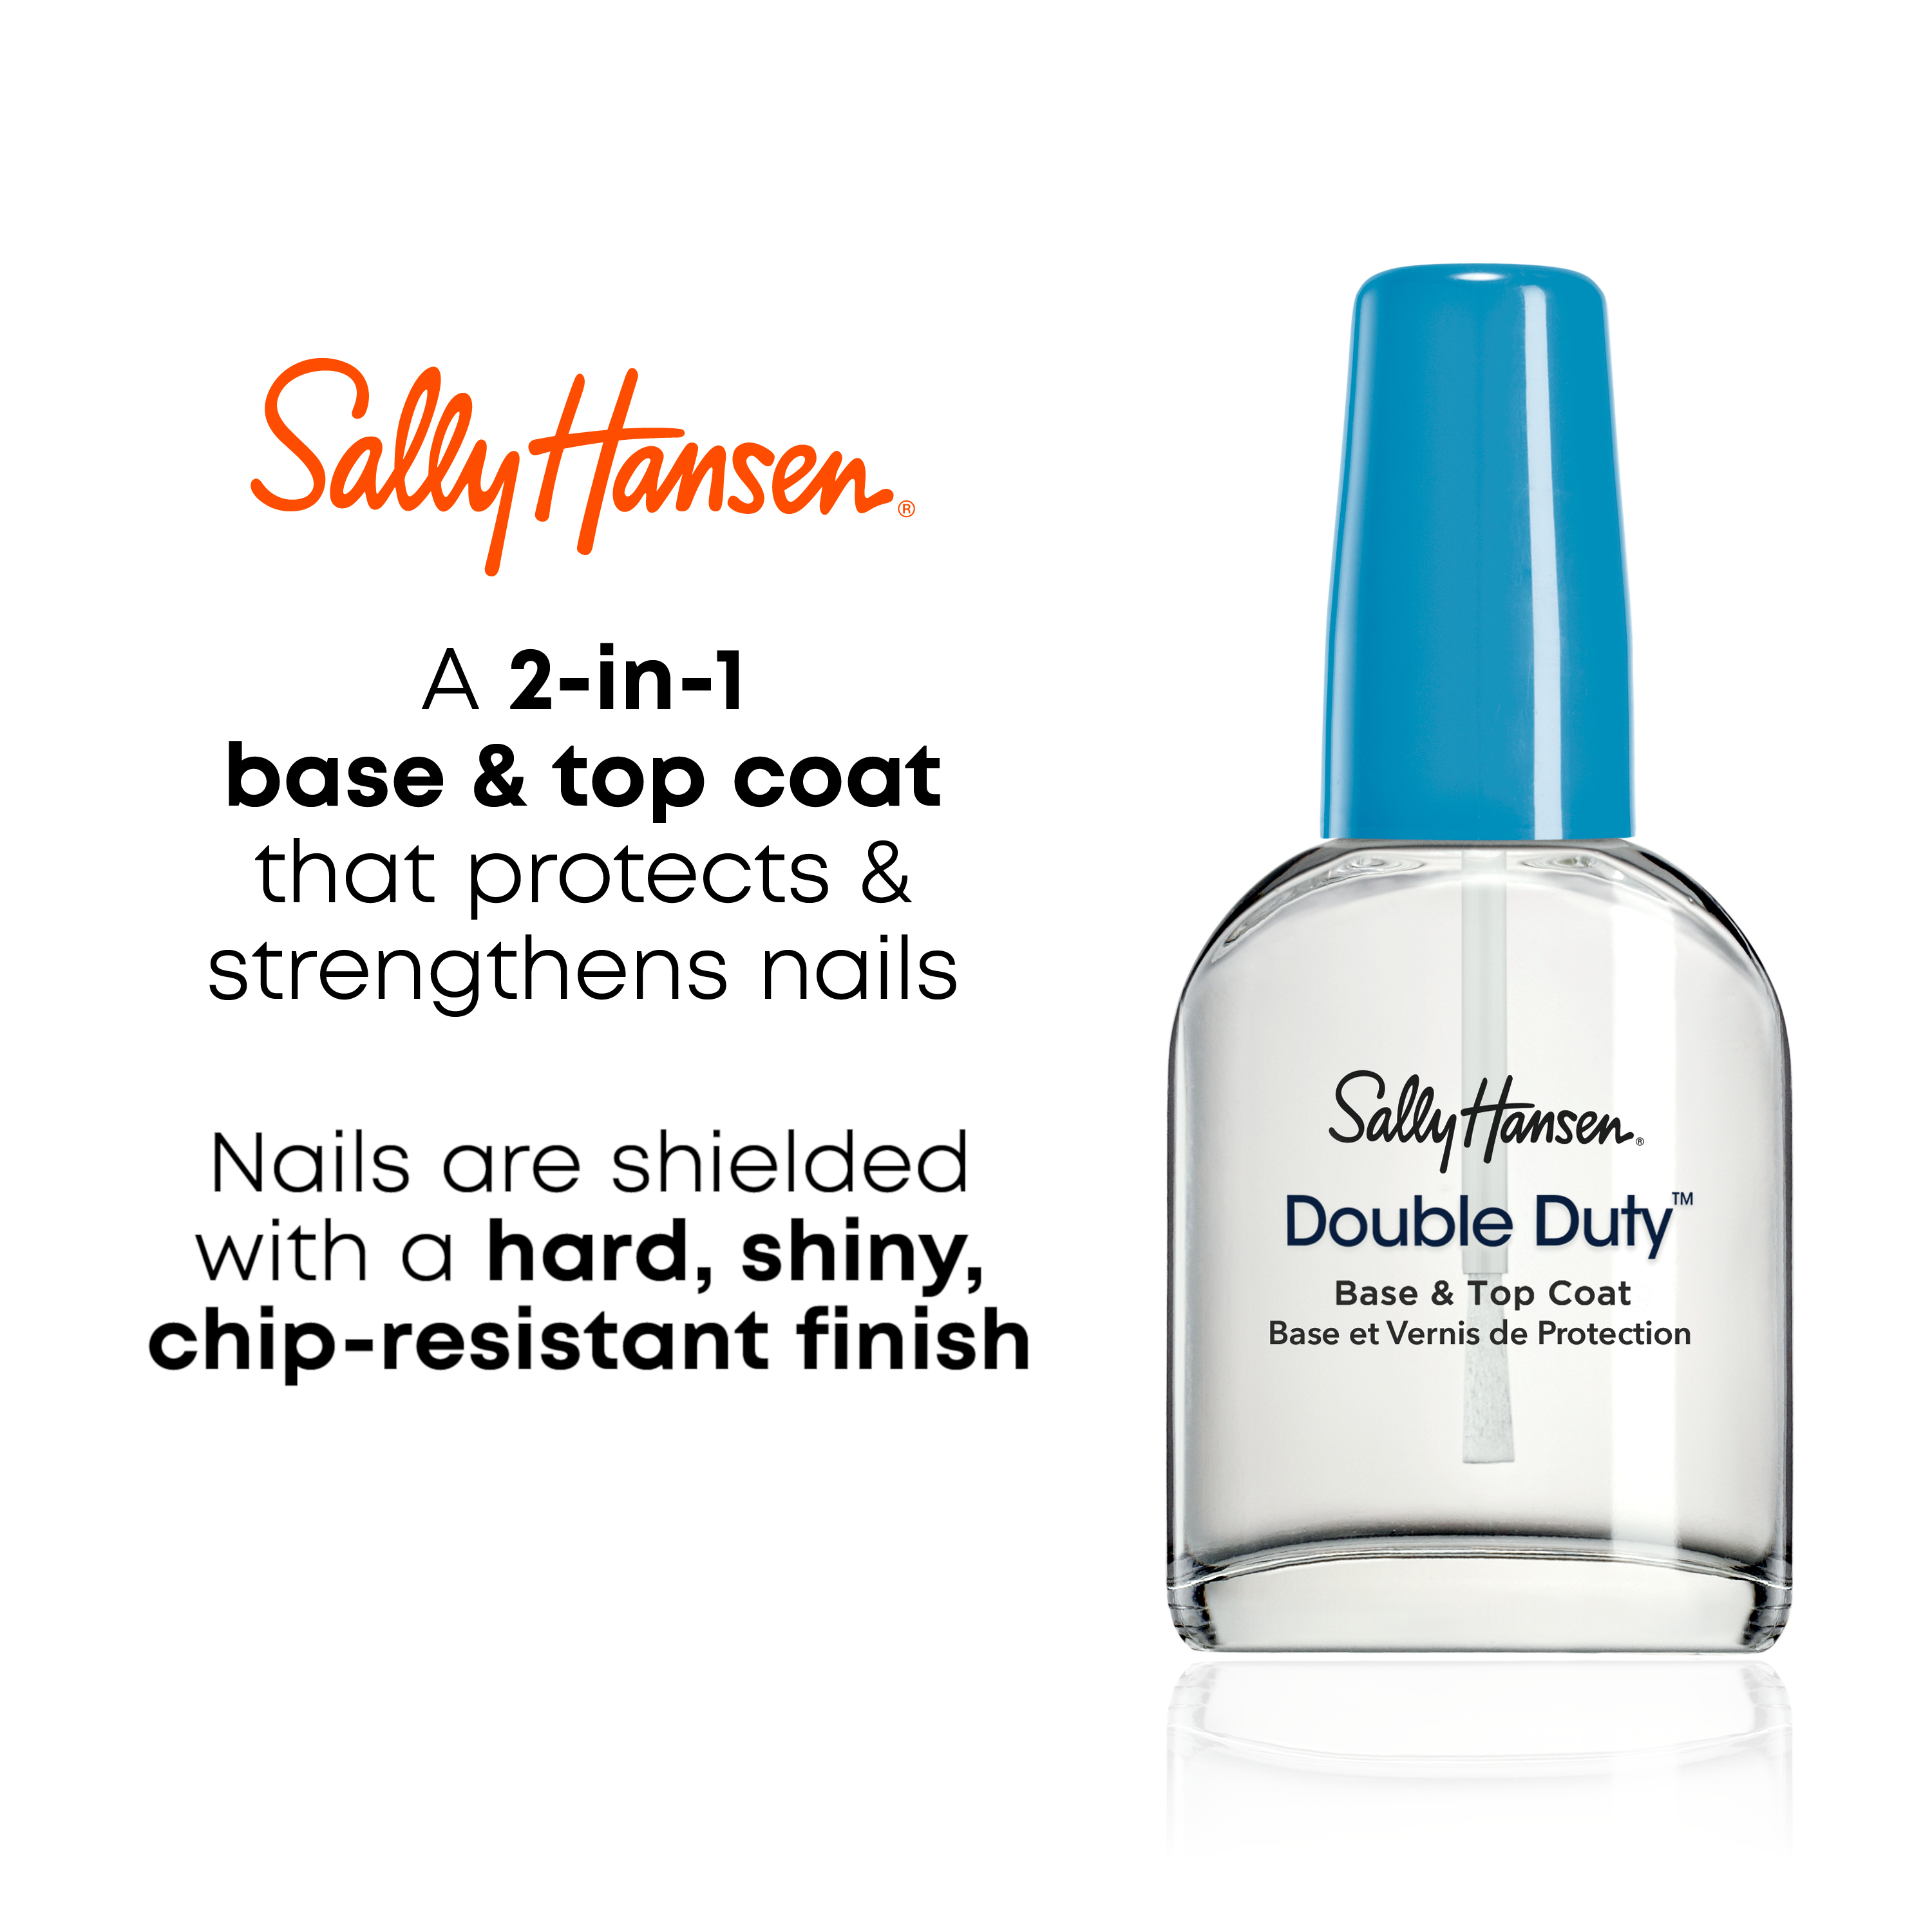 Sally Hansen Double Duty Base & Top Coat™, Nail Strengthening Polish, 0.45 fl oz - image 2 of 8